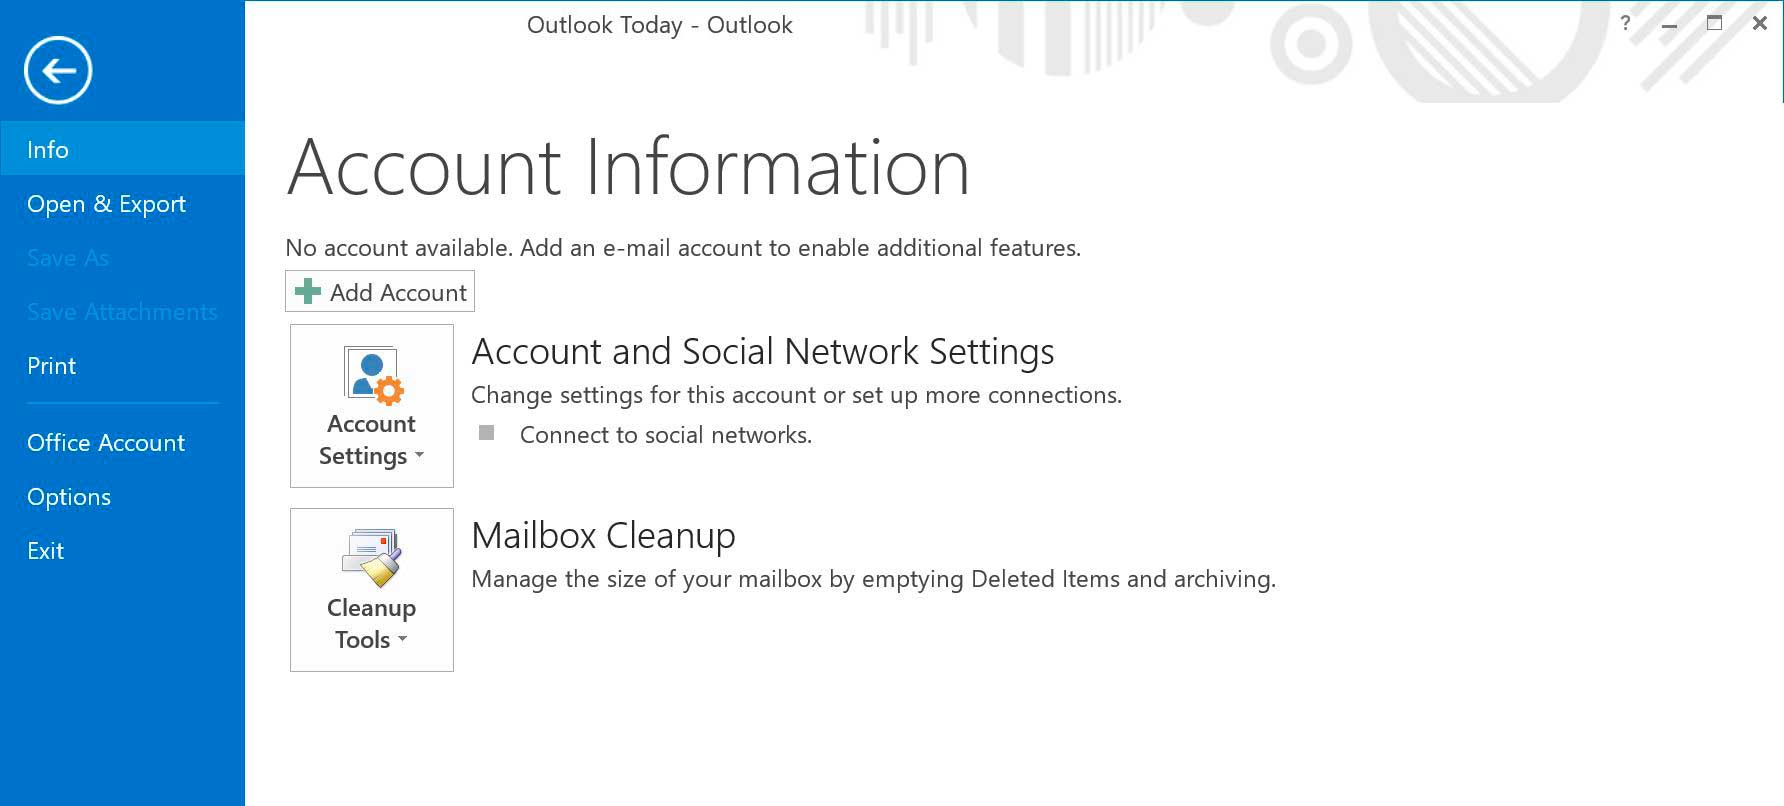 Windows : Outlook 2013 - Add Account